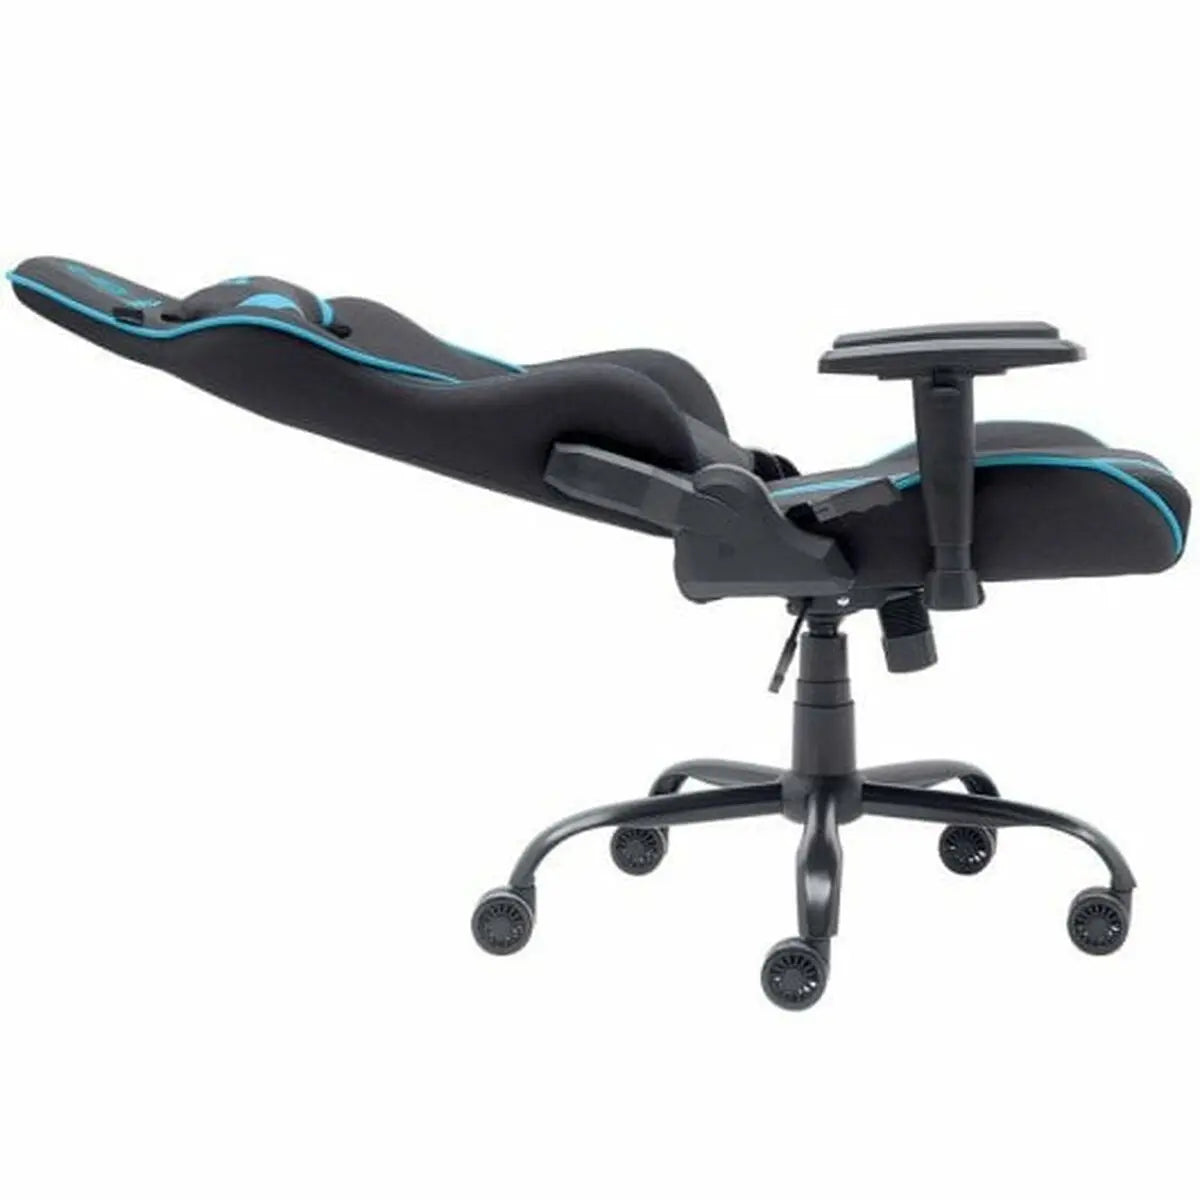 Gaming Chair Newskill Kitsune V2 Blue - IGSI Europe Ltd